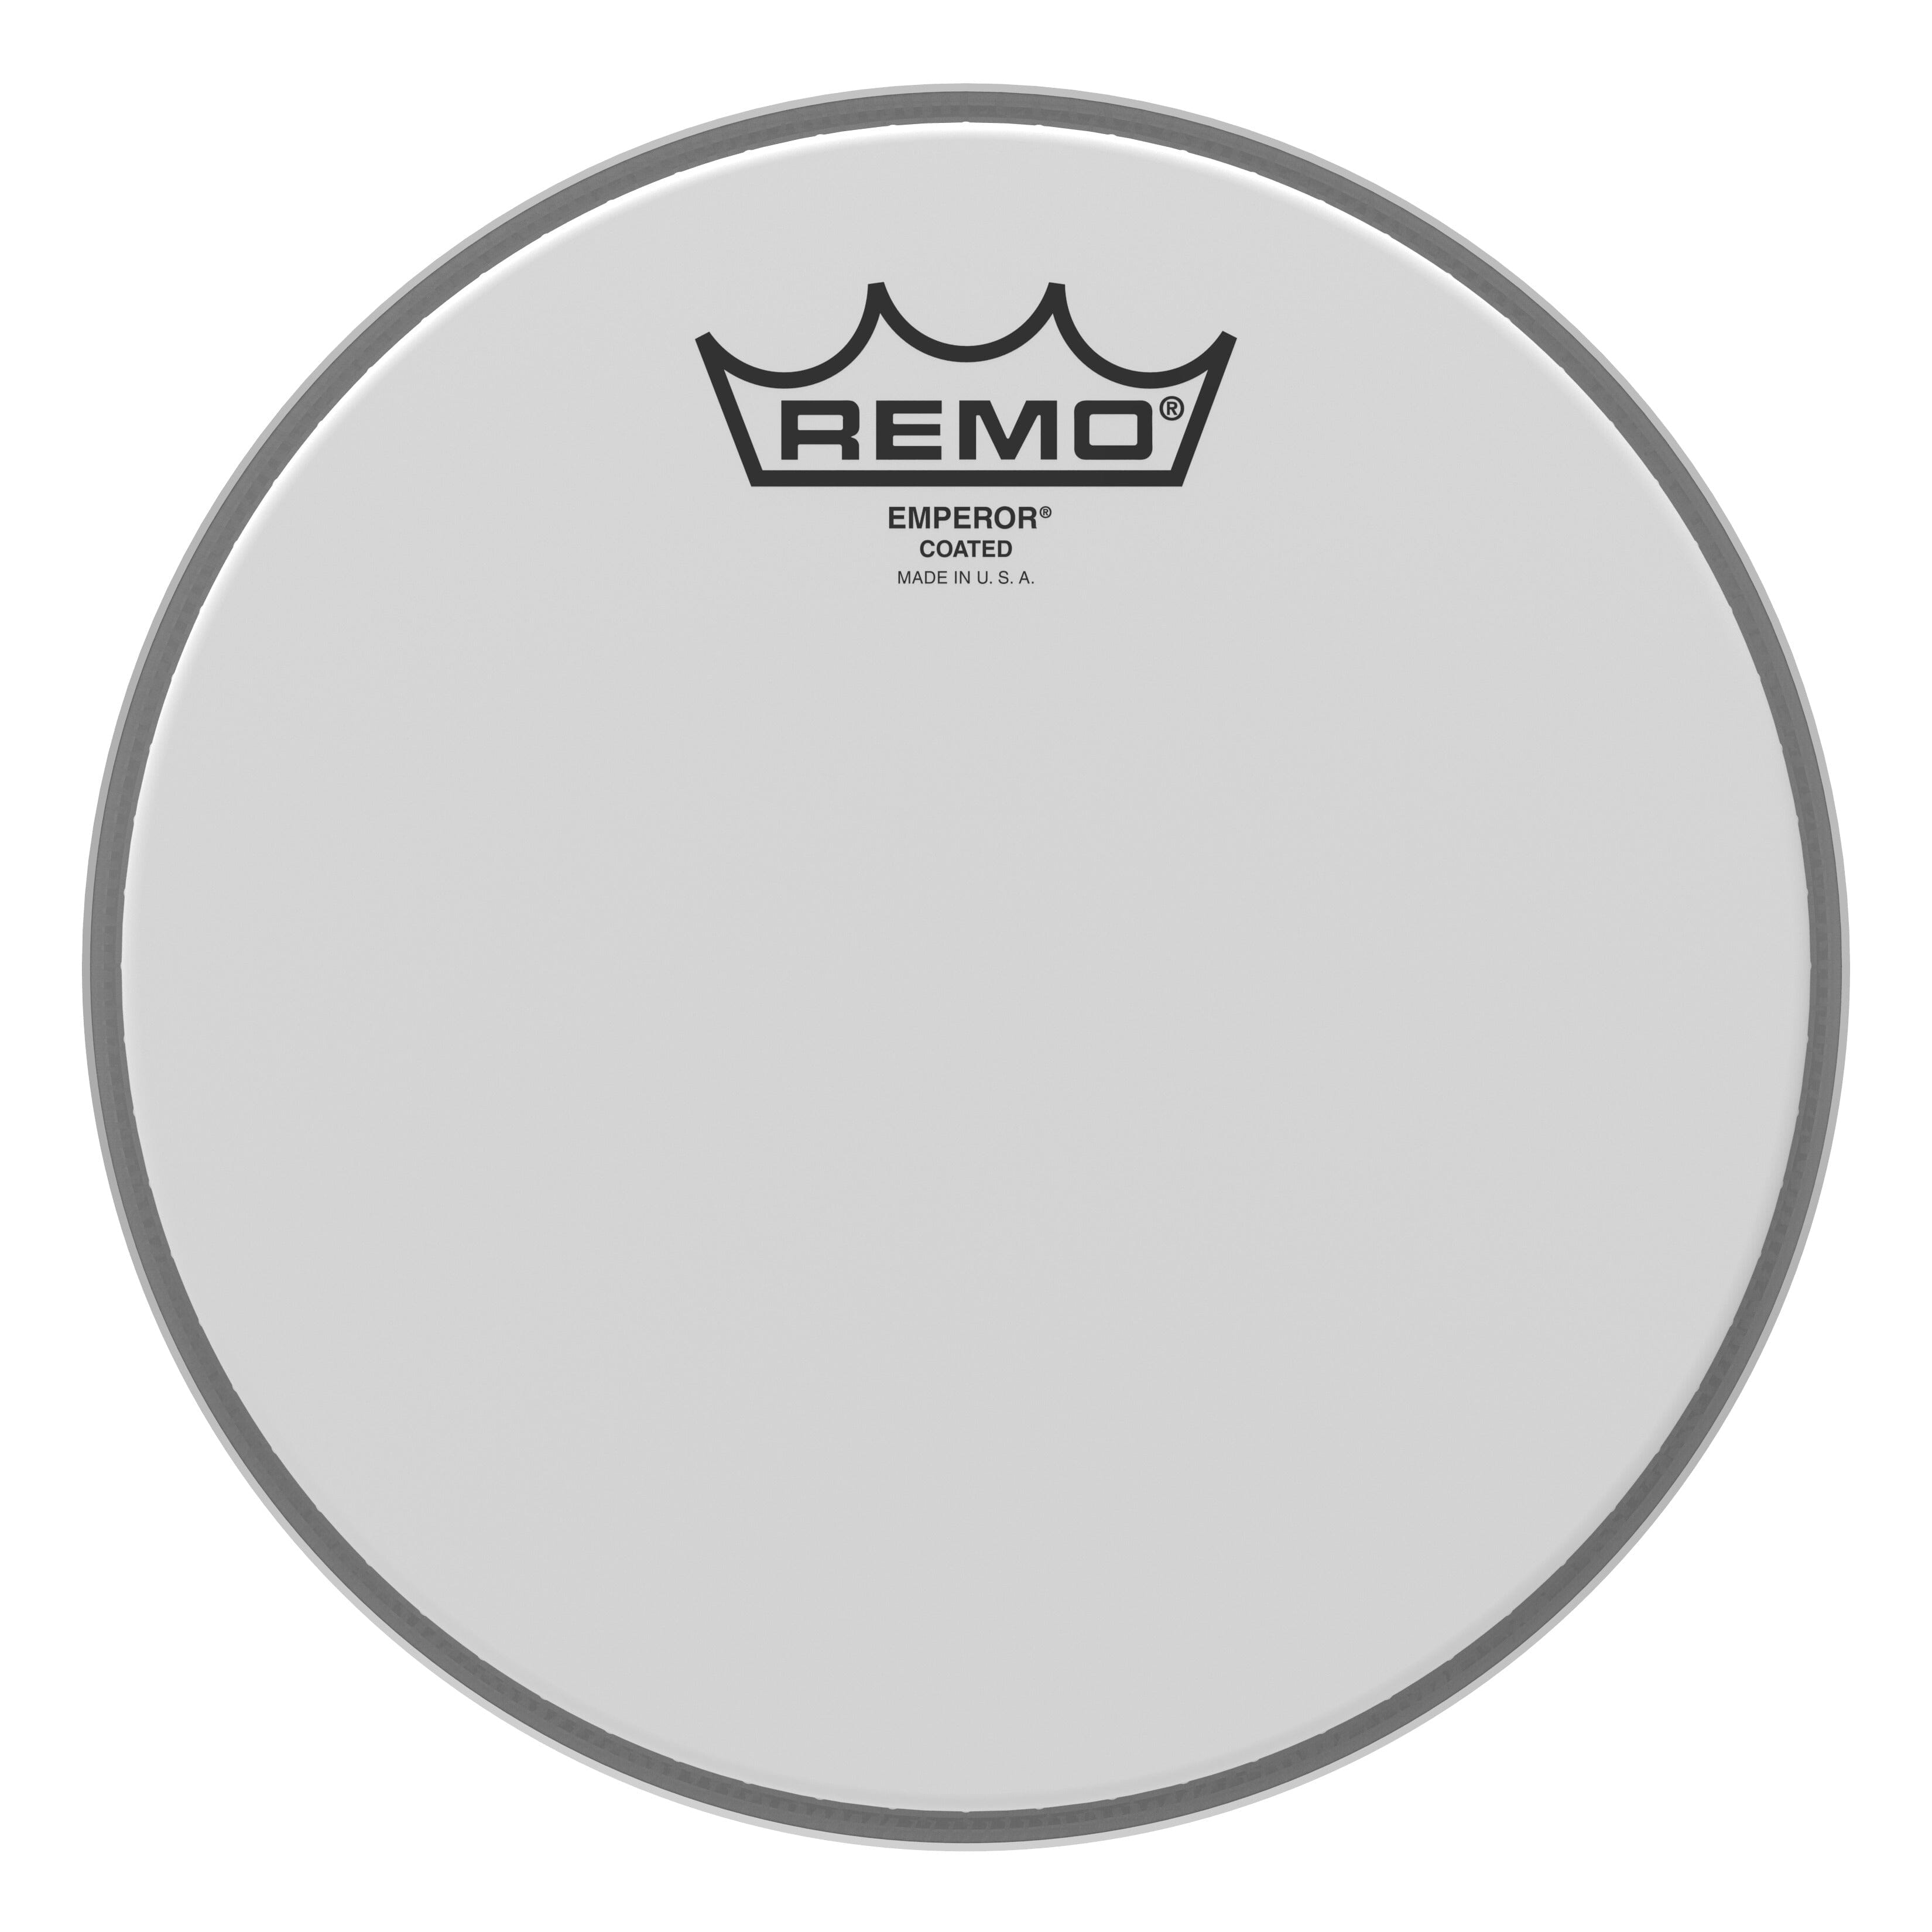 Remo 6" Coated Emperor Drum Head (BE-0106-00) DRUM SKINS Remo 